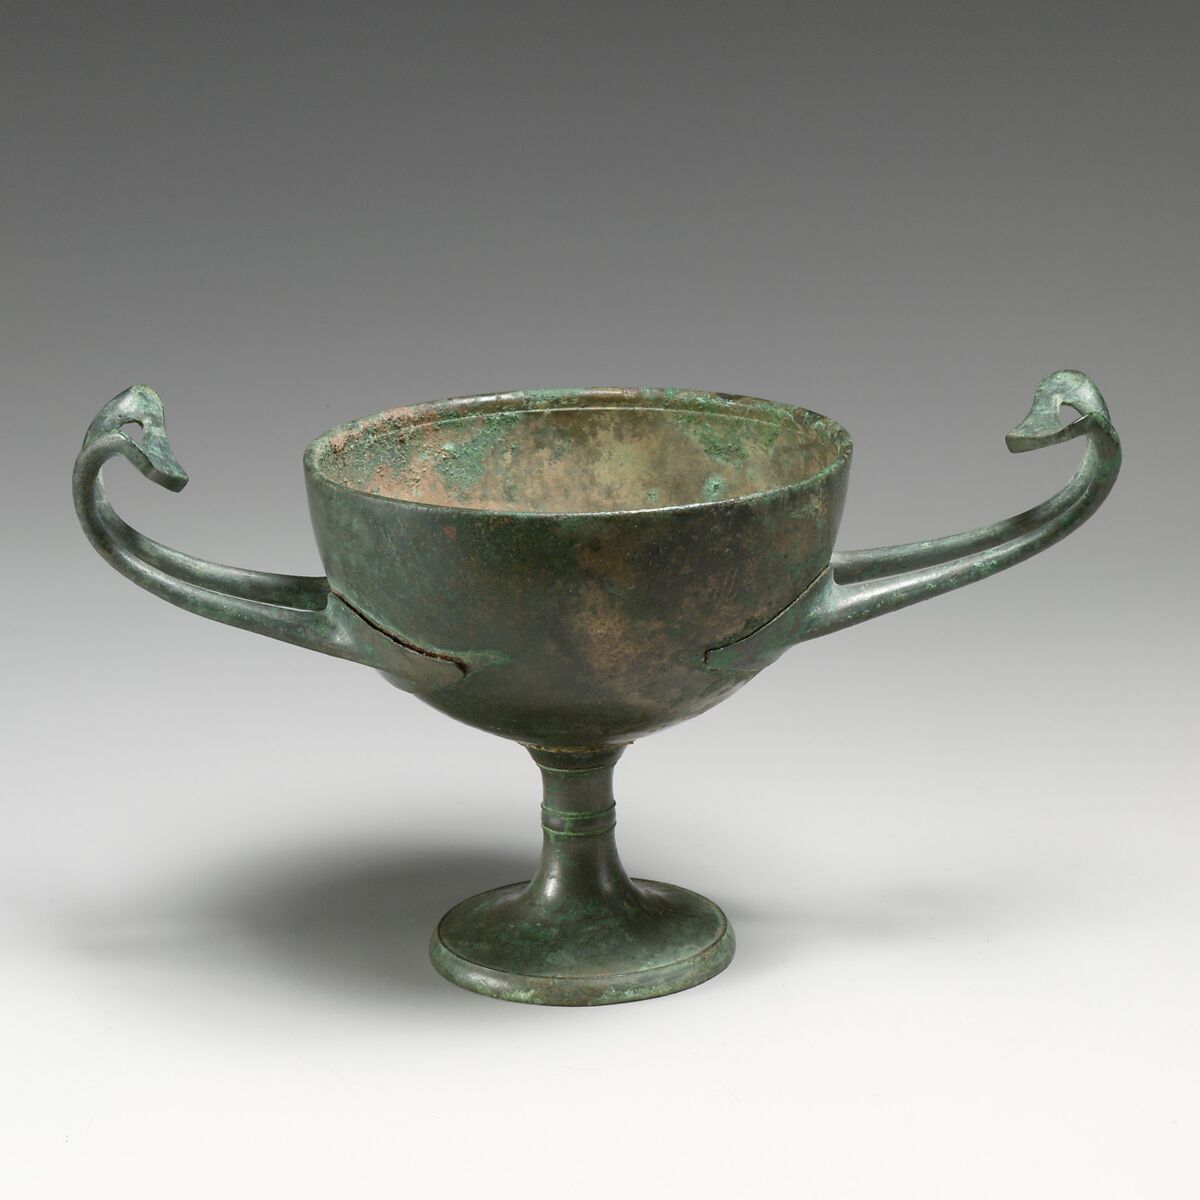 Bronze kylix (drinking cup), Bronze, Greek 